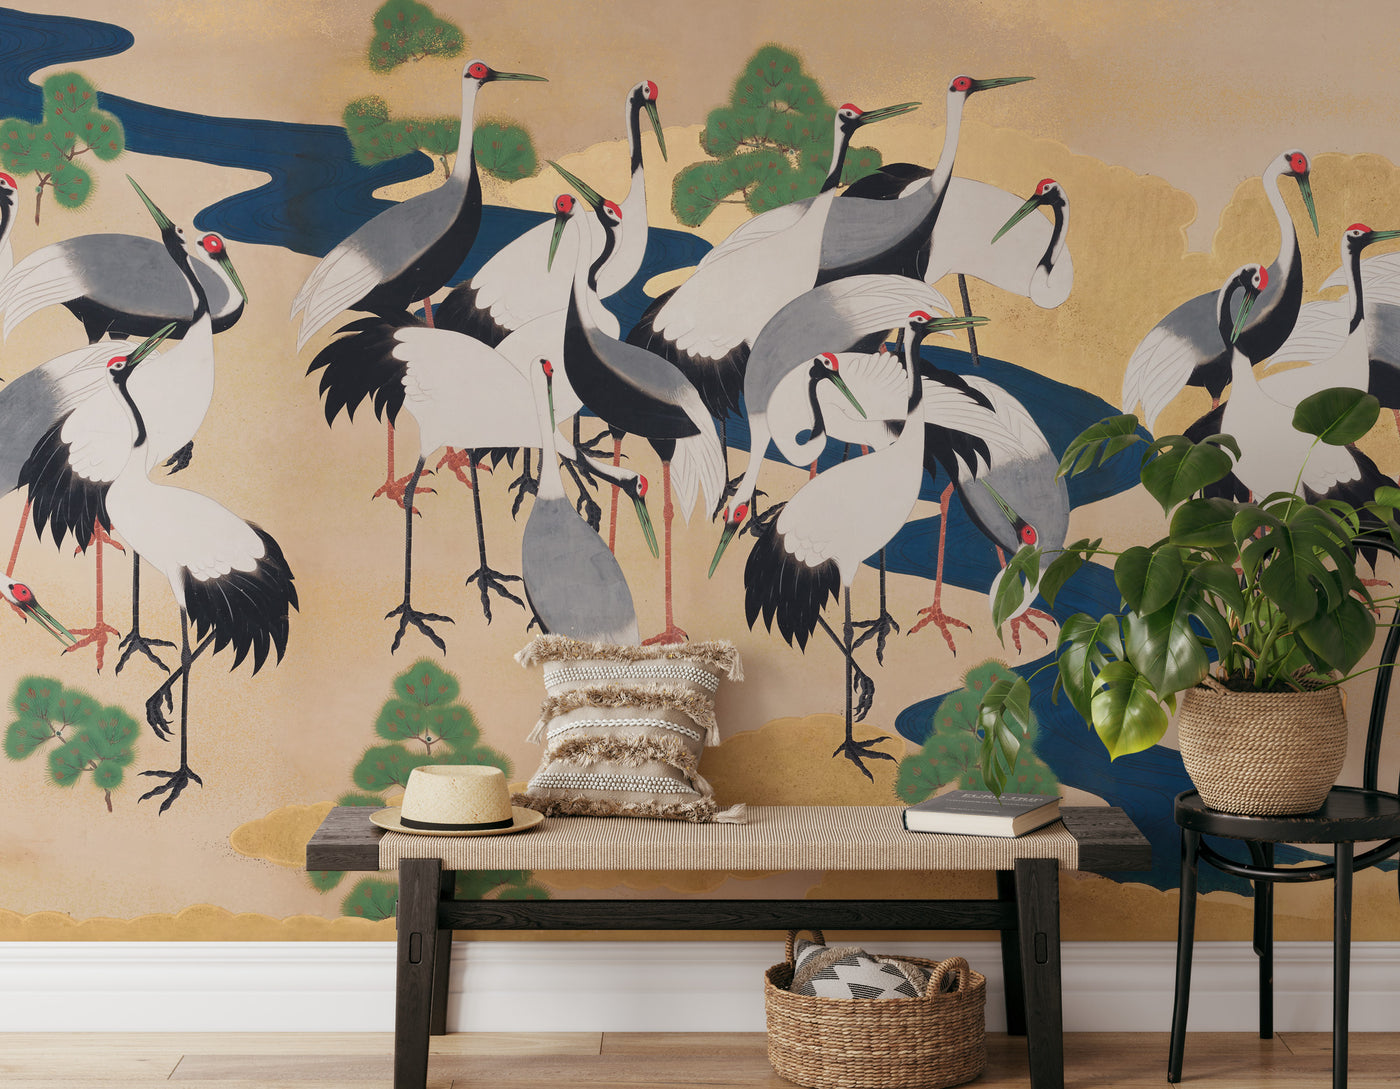 Graceful Flight of Japanese Cranes Panoramic Wall Mural